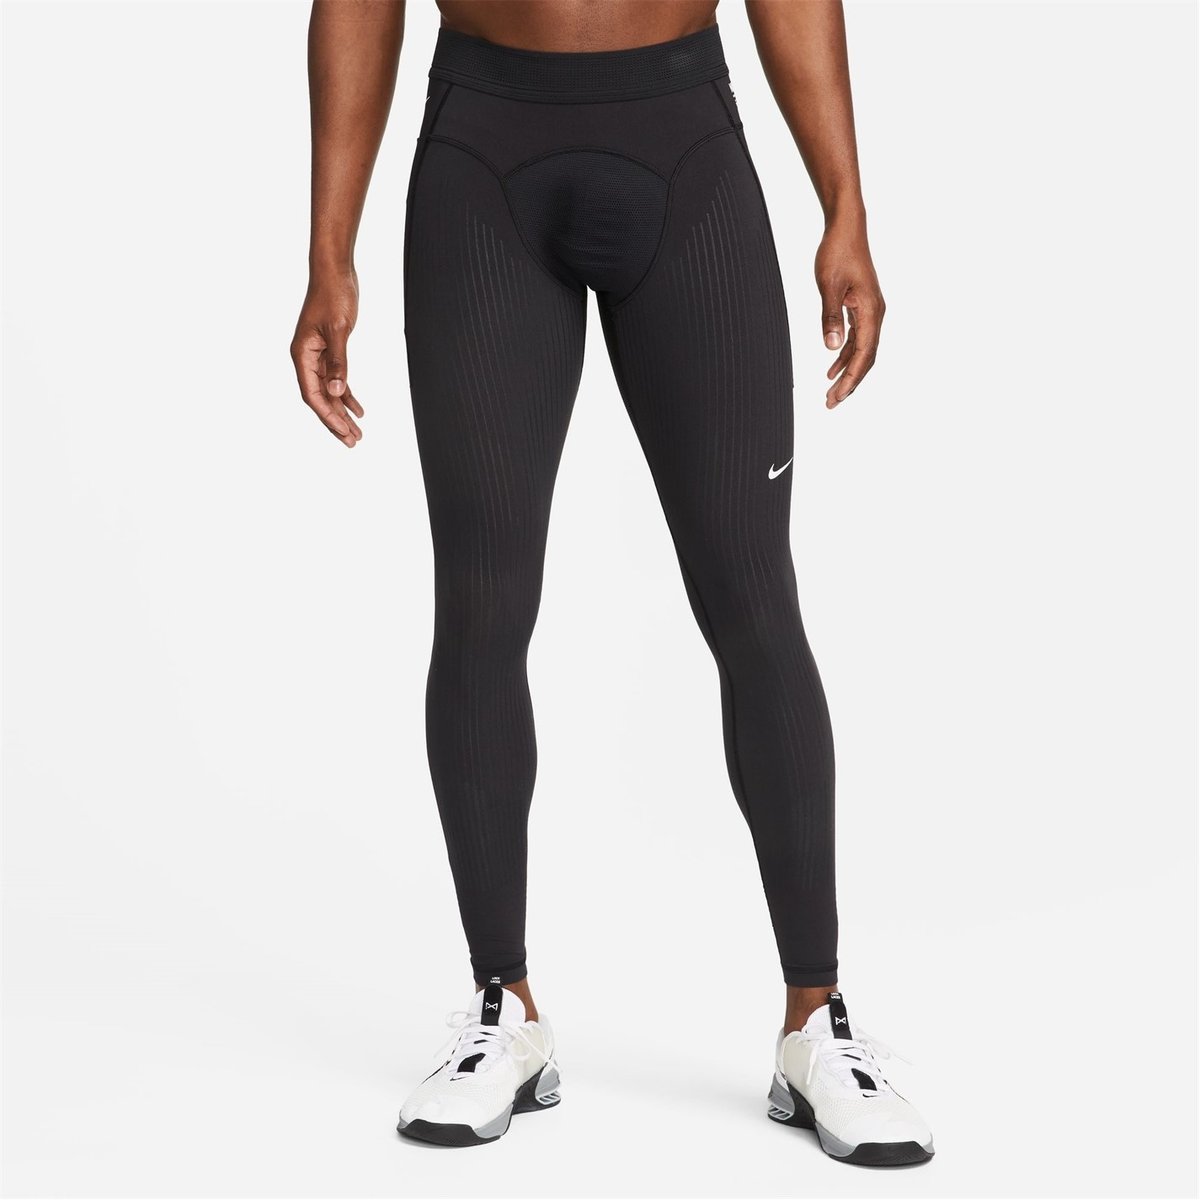 Nike Mens Running Clothing - Sweatshop